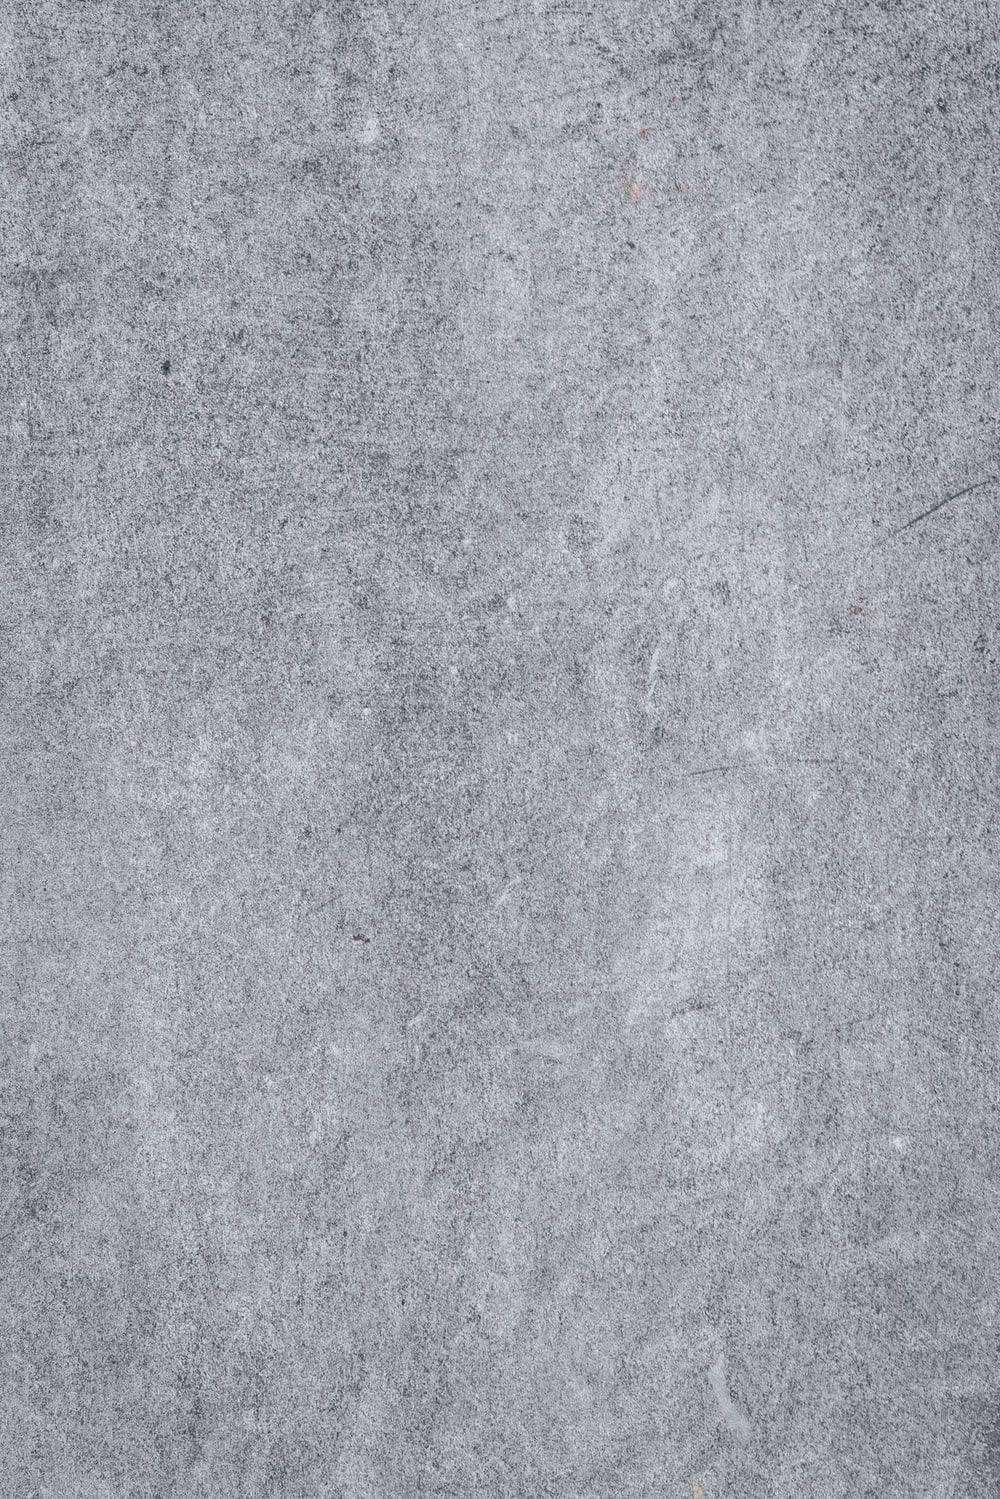 Light Gray Stone Texture Wallpaper